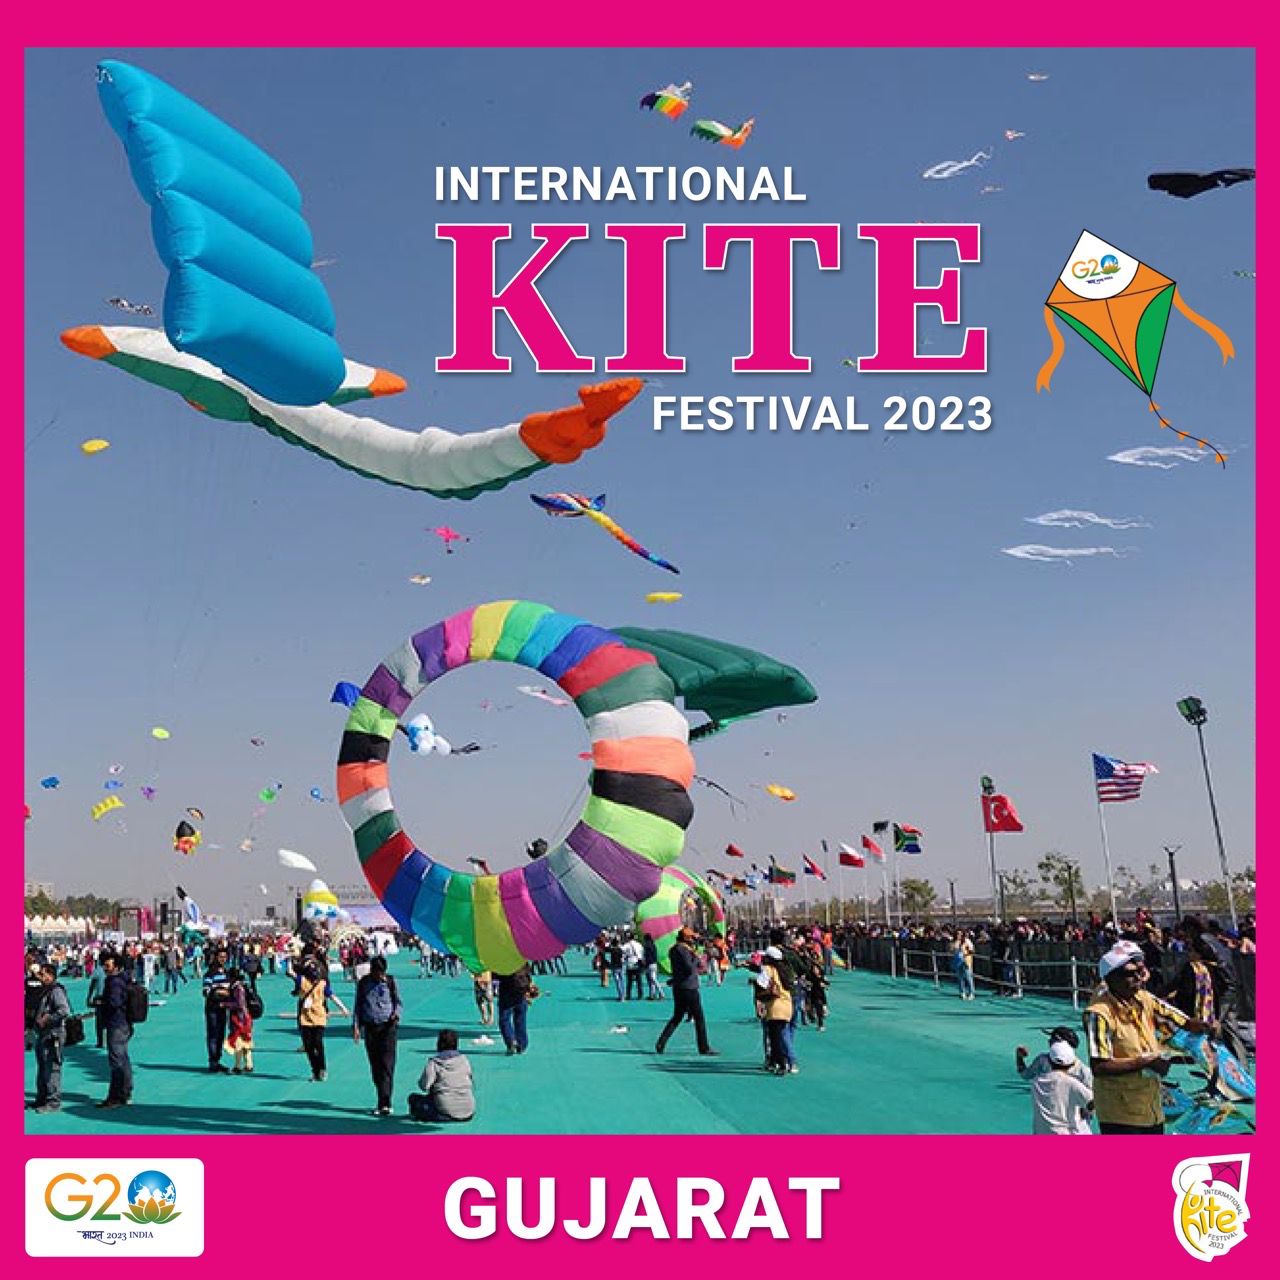 International Kite Festival 2023: બે વર્ષ બાદ ગુજરાતમાં યોજાશે આંતરરાષ્ટ્રીય પતંગ મહોત્સવ, જાણો કઈ હશે થીમ